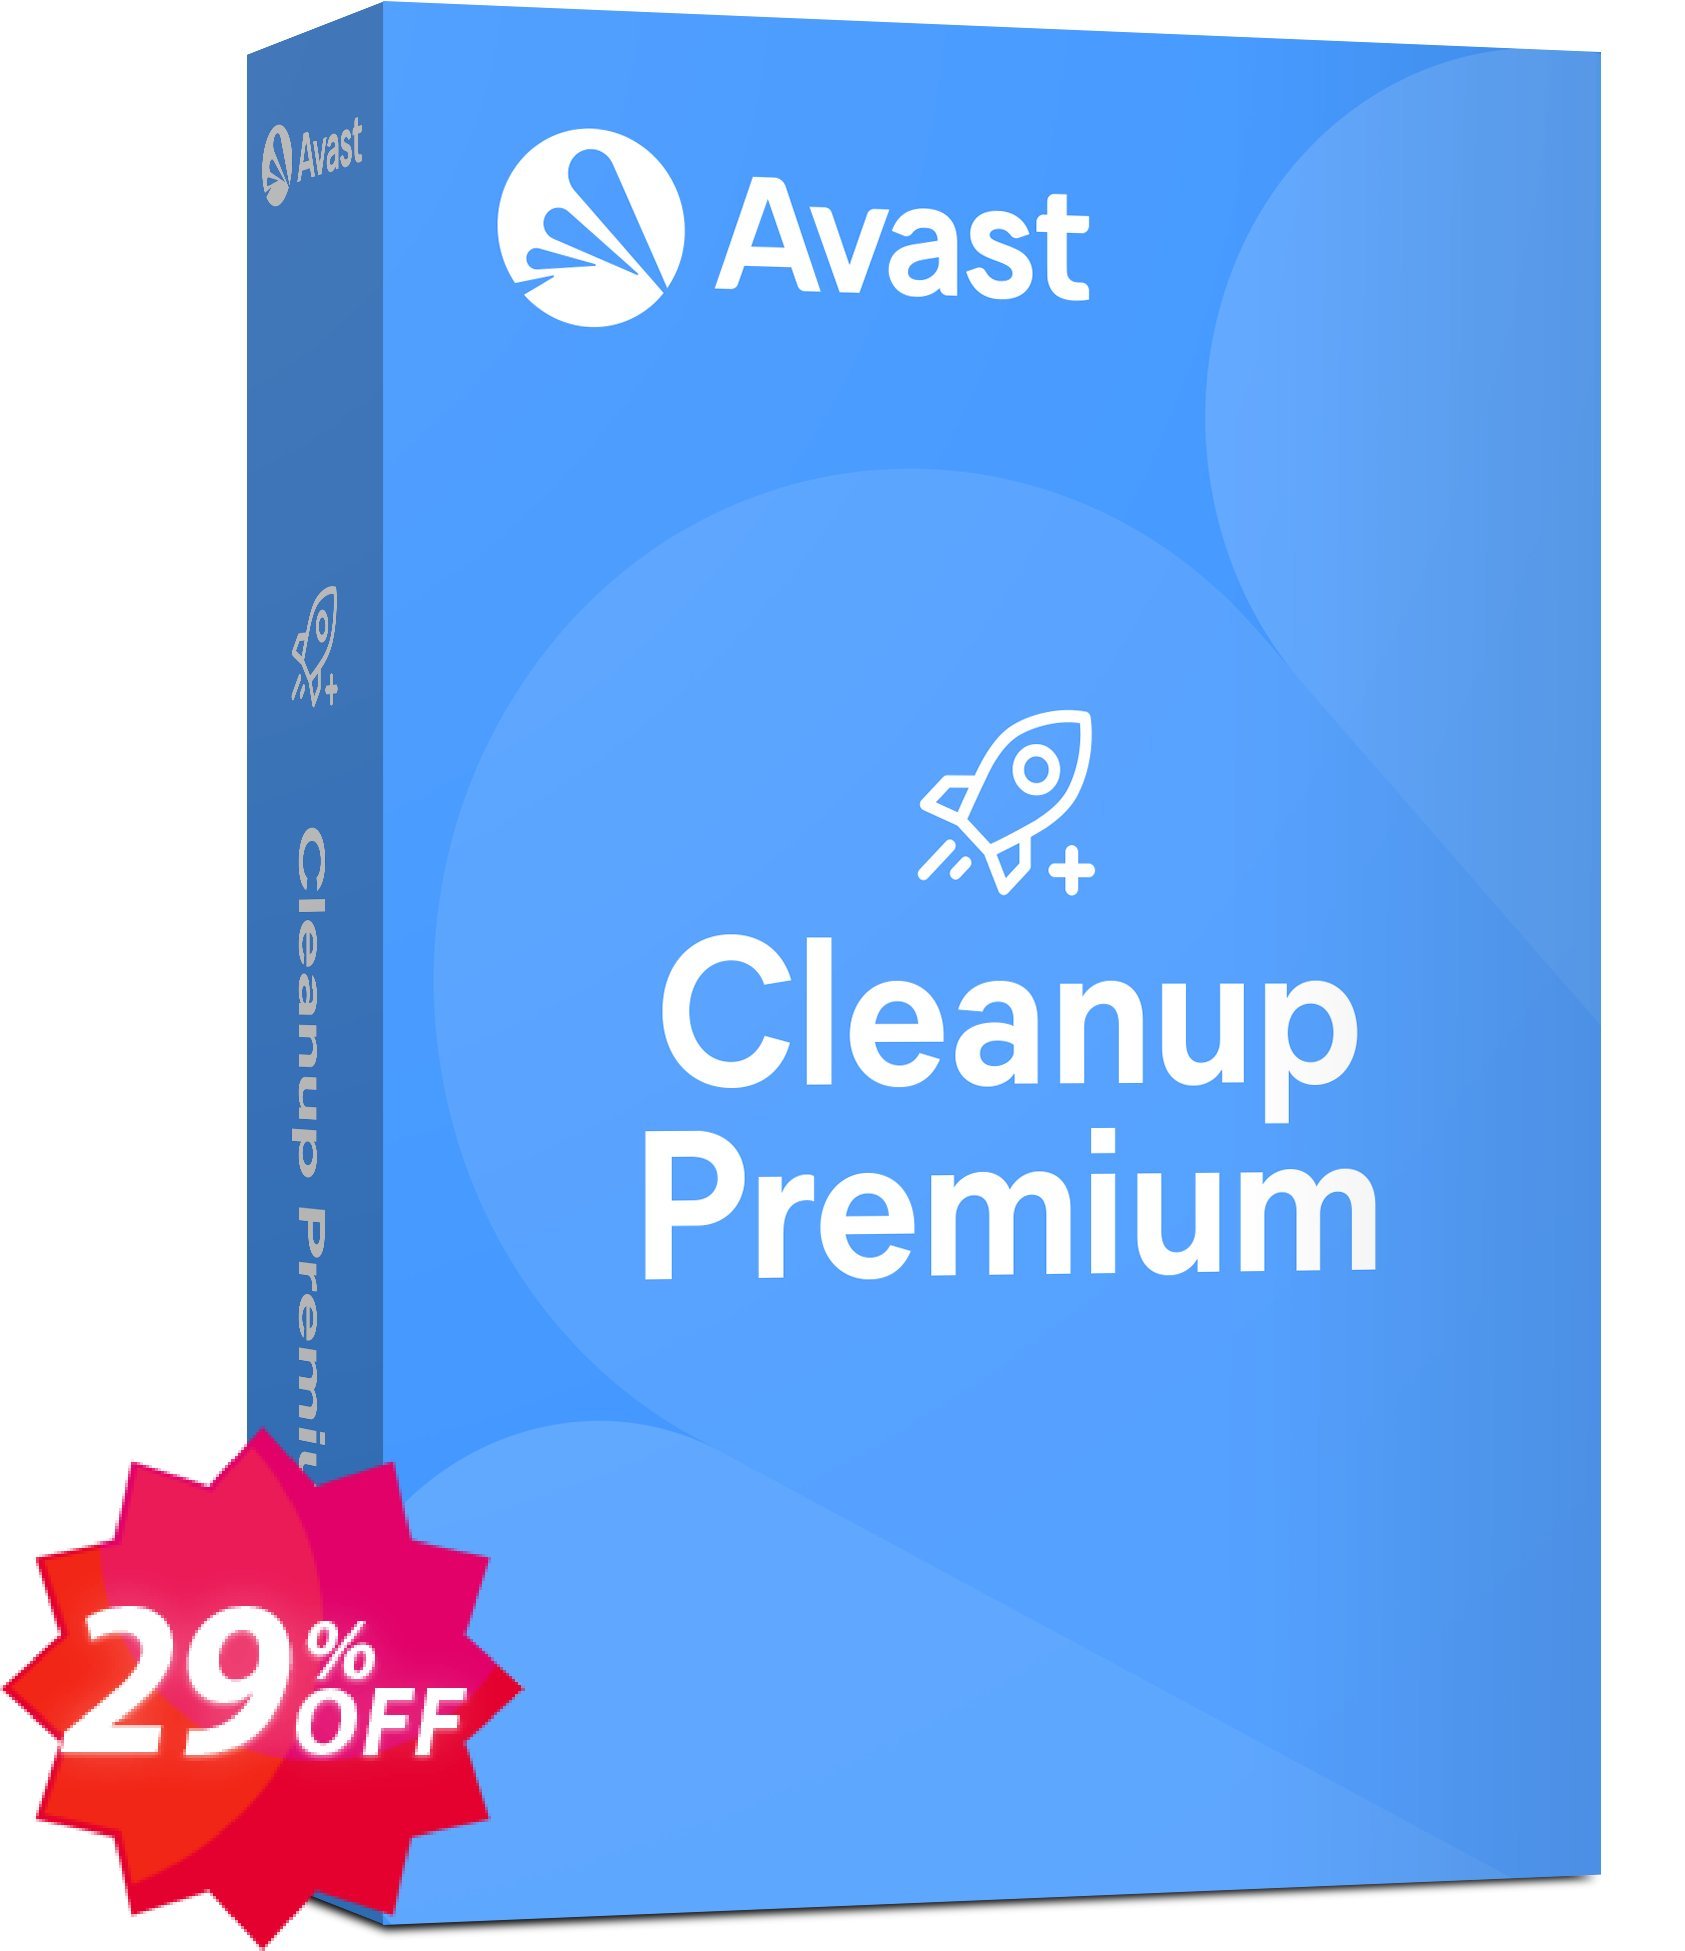 Avast Cleanup Premium Coupon code 29% discount 